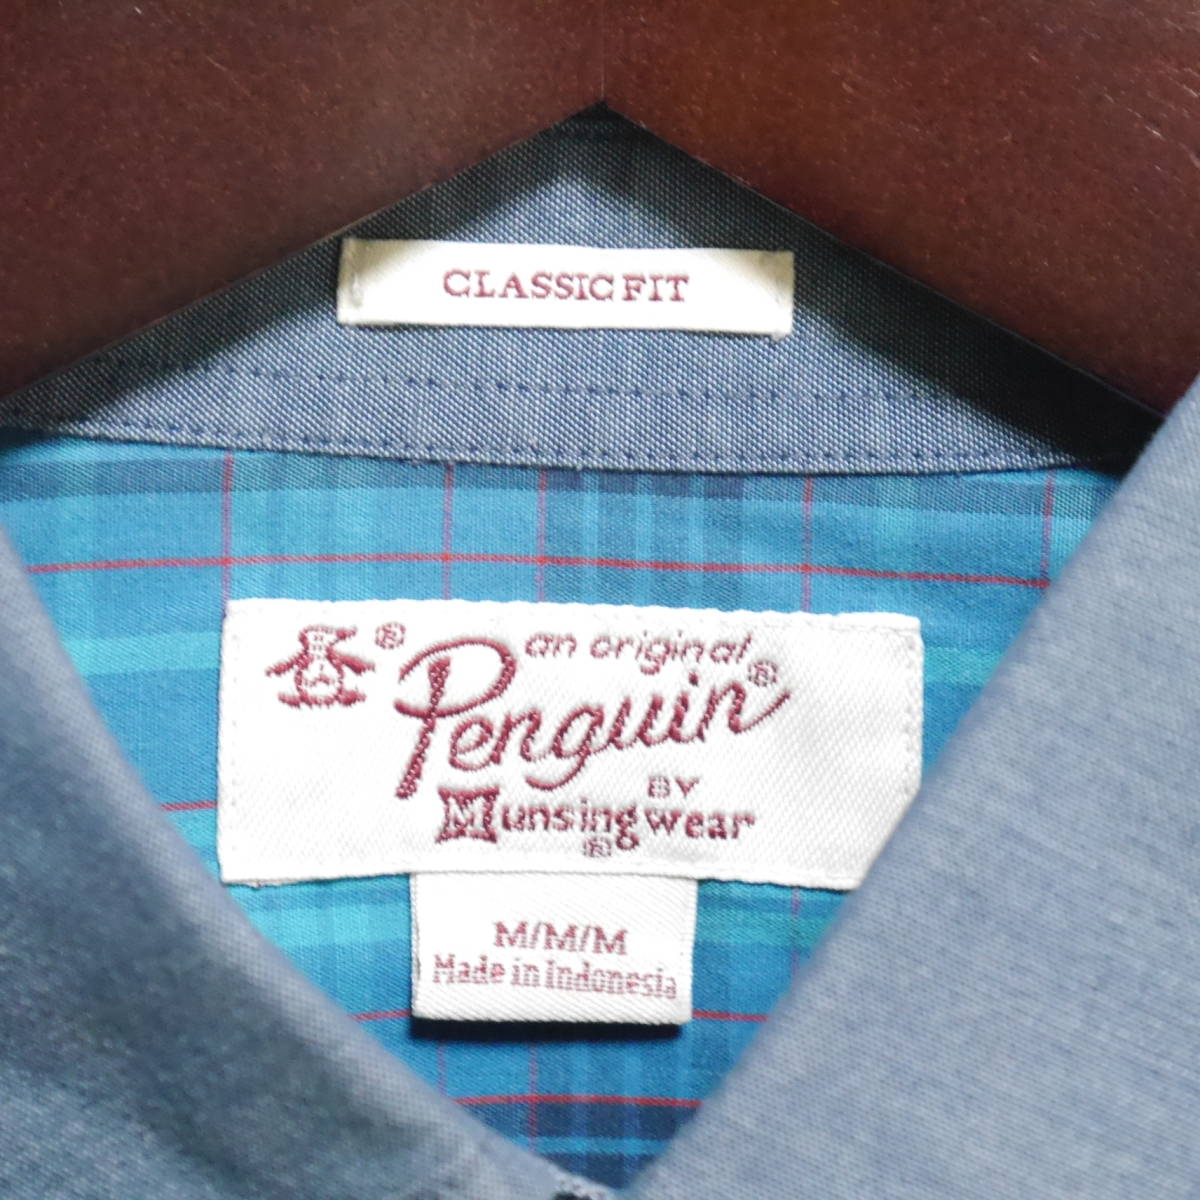 F24 * Penguin by Munsingwear * penguin bai Munsingwear wear long sleeve shirt gray used size M